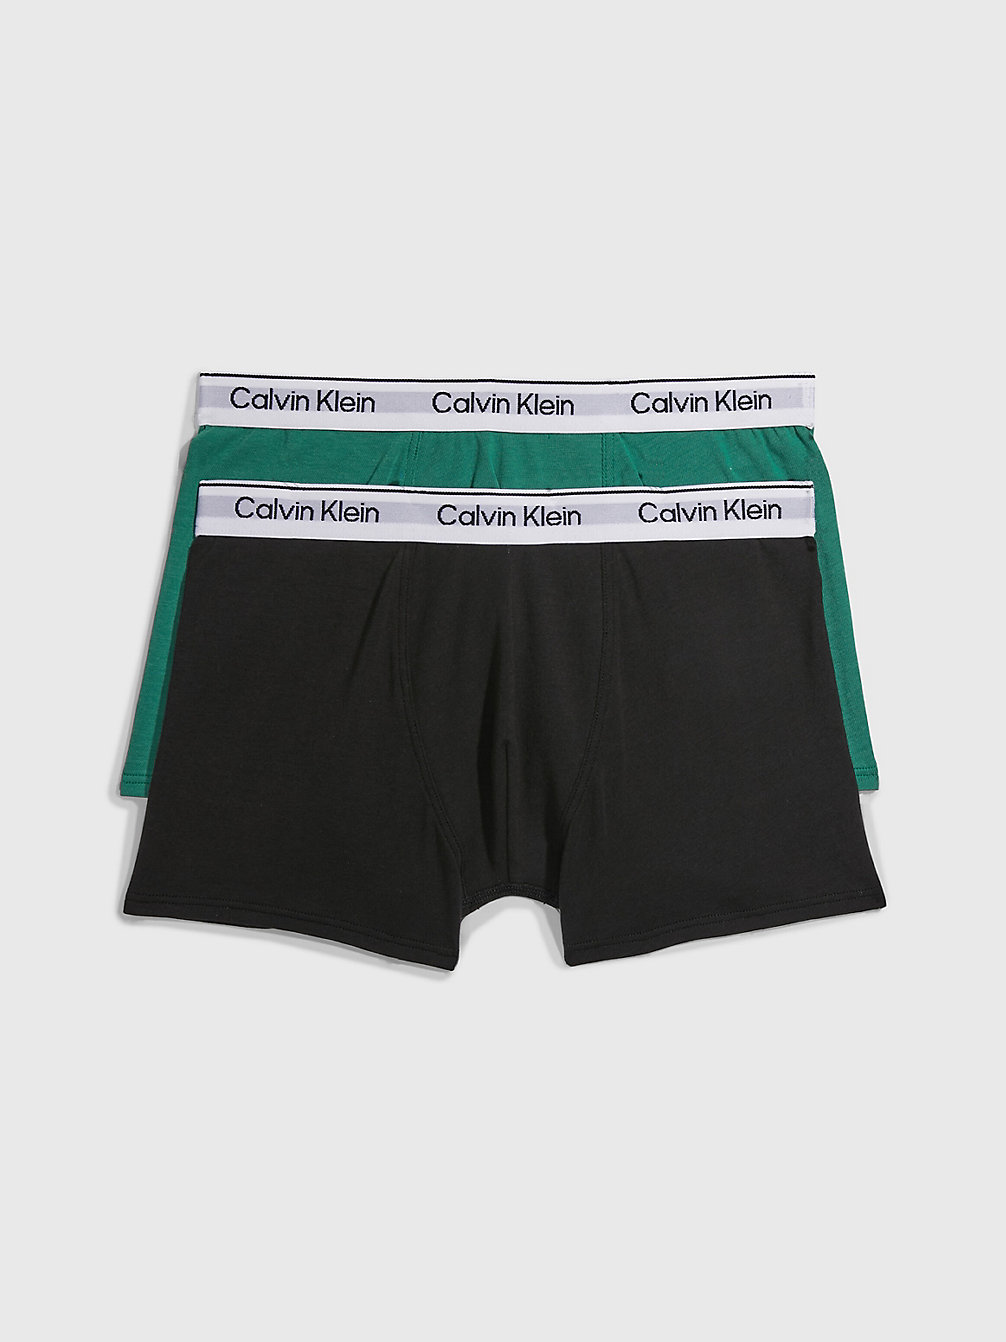 FOLIAGEGREEN/PVHBLACK 2 Pack Boys Trunks - Modern Cotton undefined boys Calvin Klein